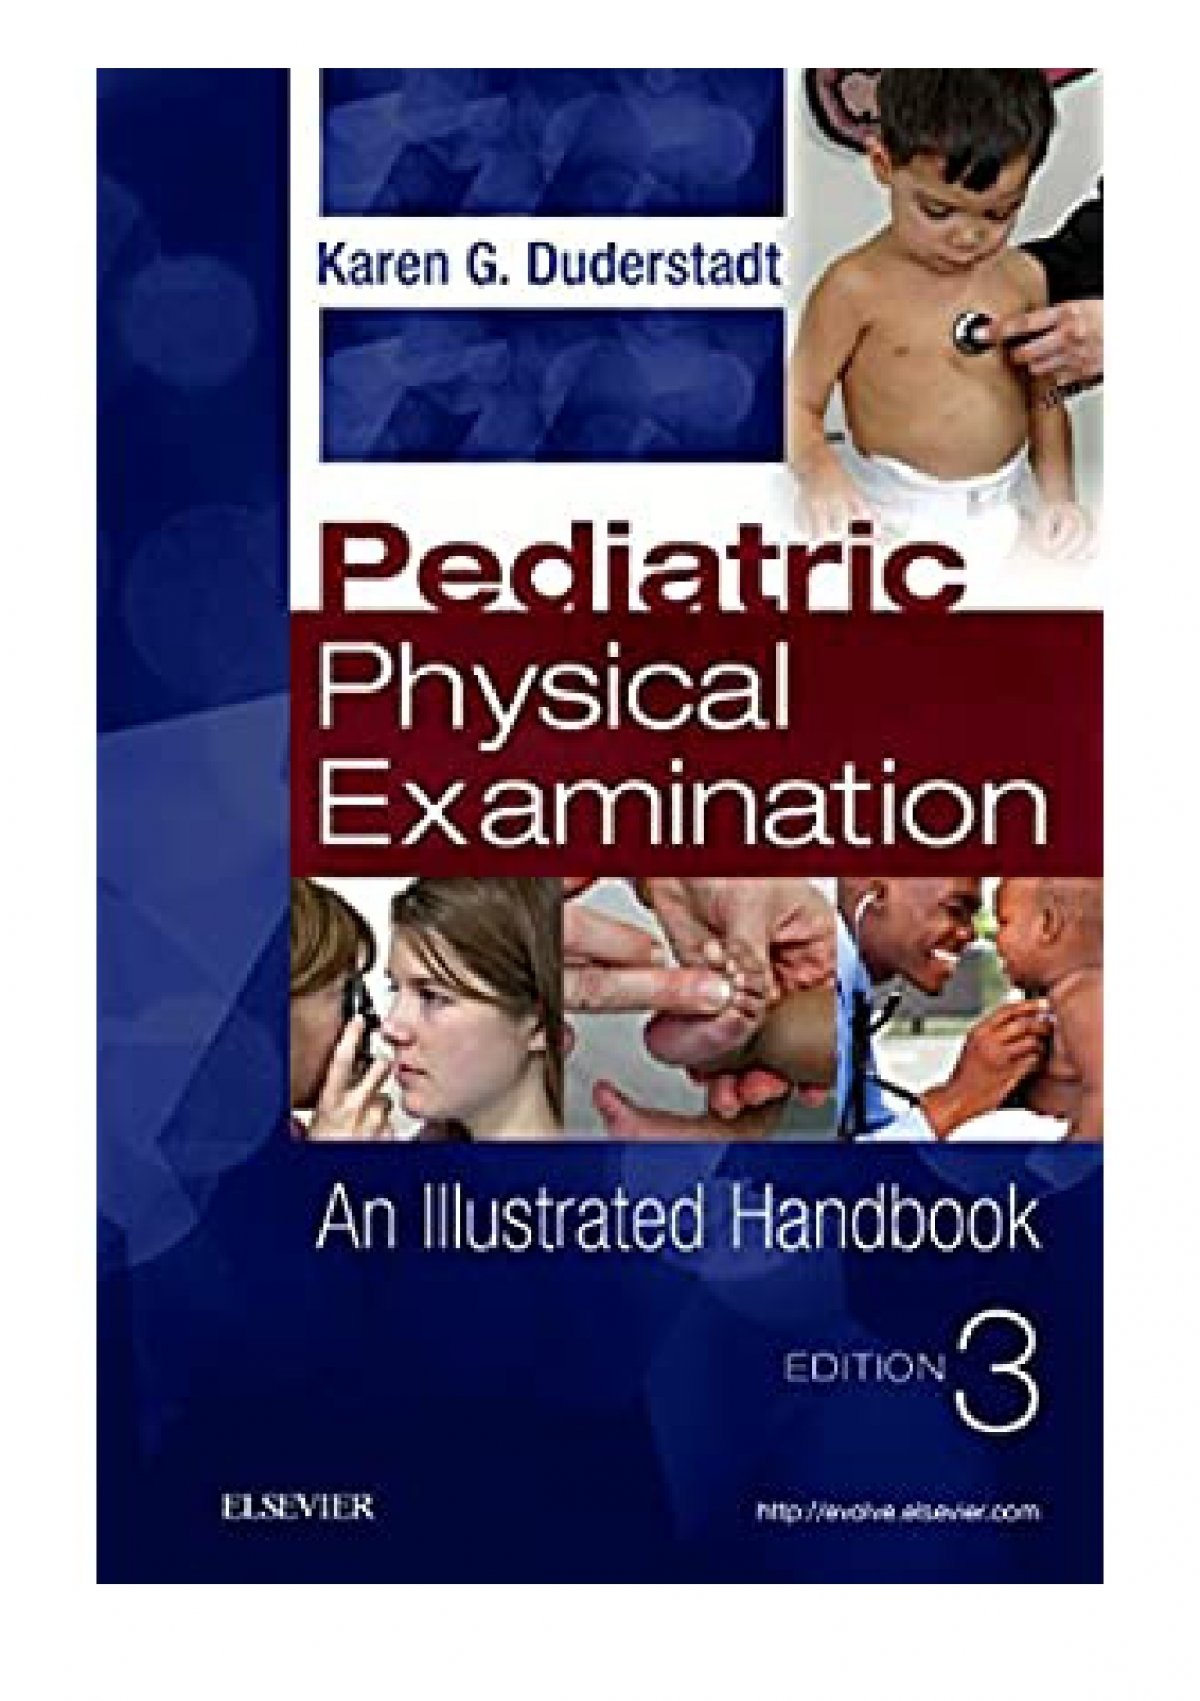 pediatric physical examination an illustrated handbook pdf free download